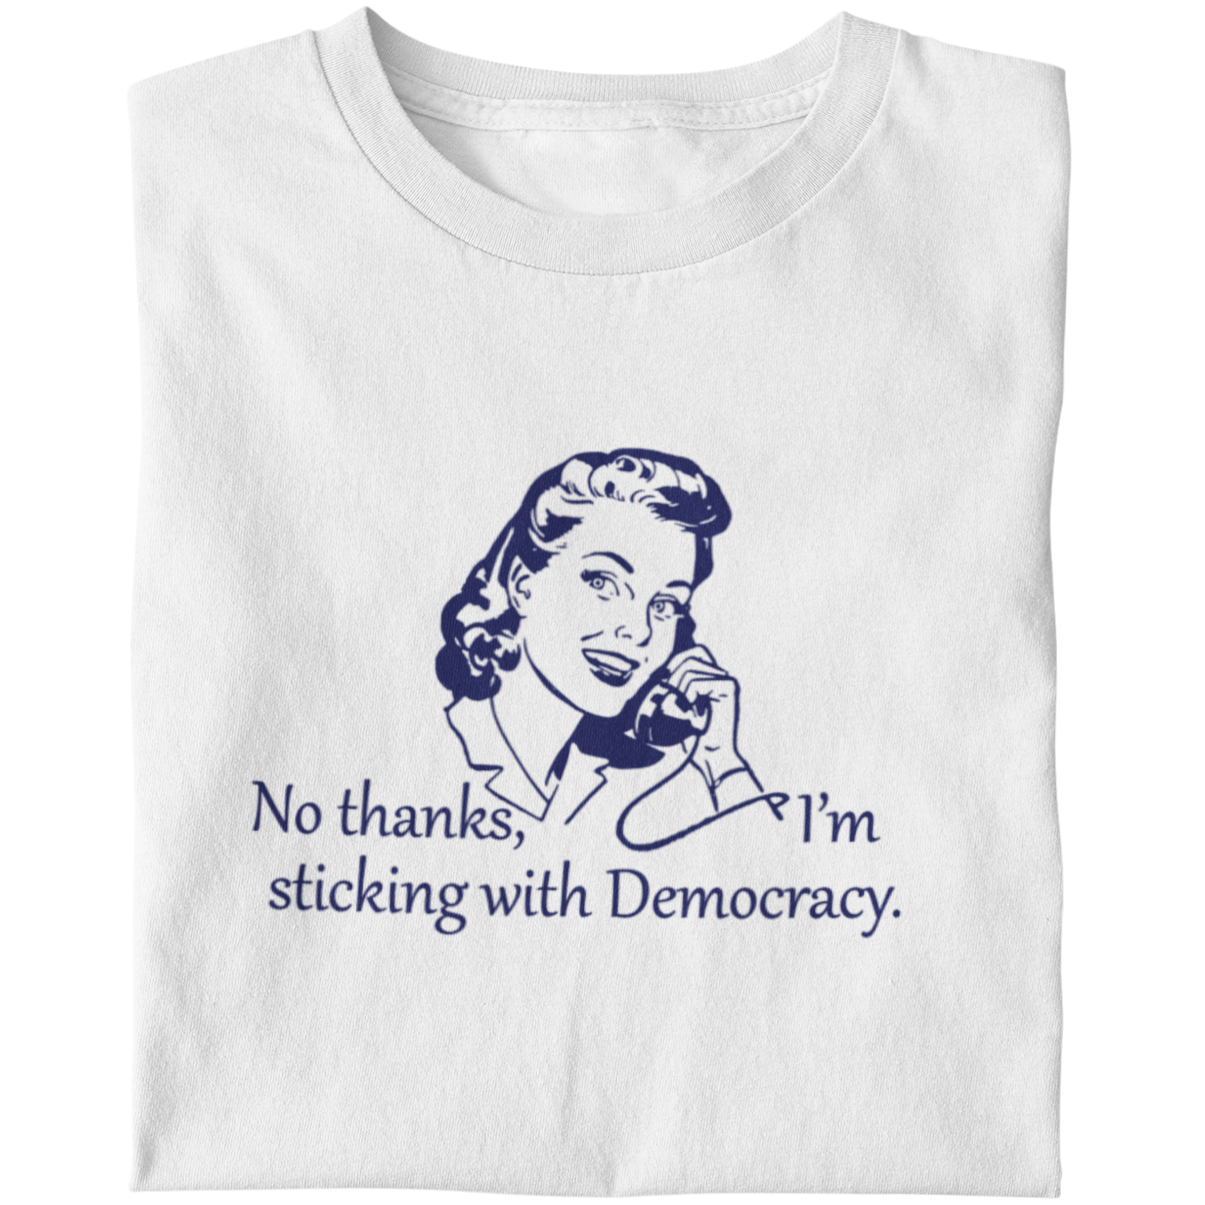 Democracy t-shirt